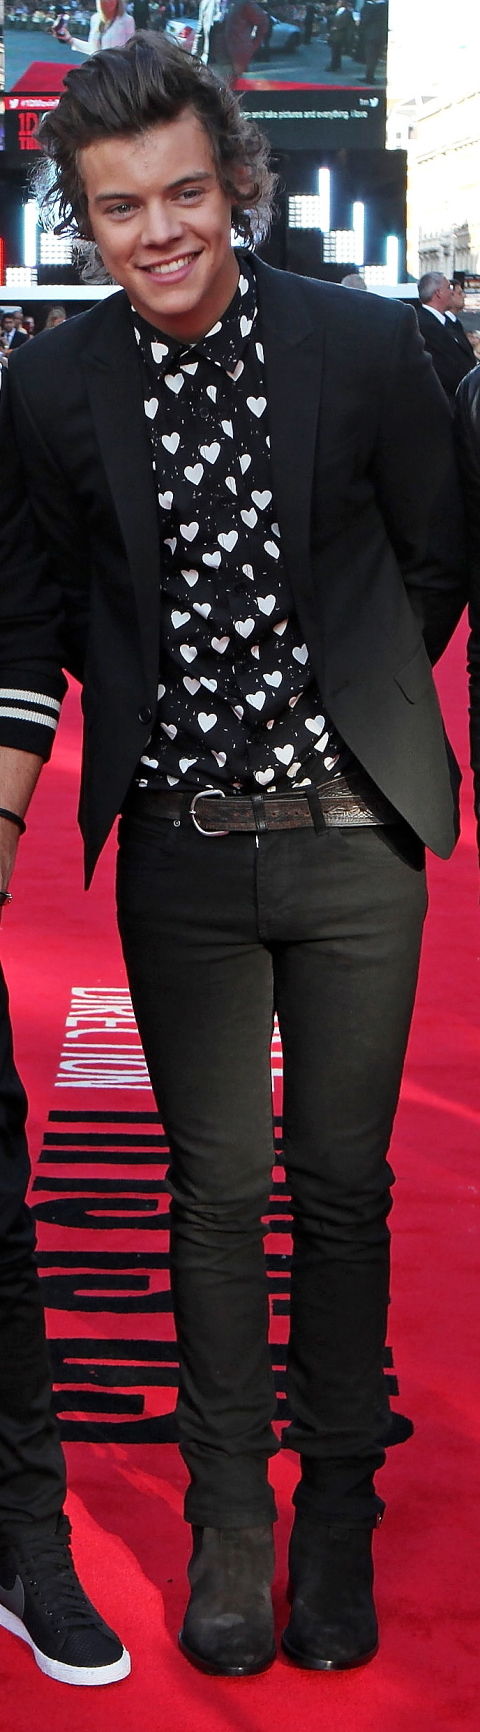 Harry Styles wearing Burberry